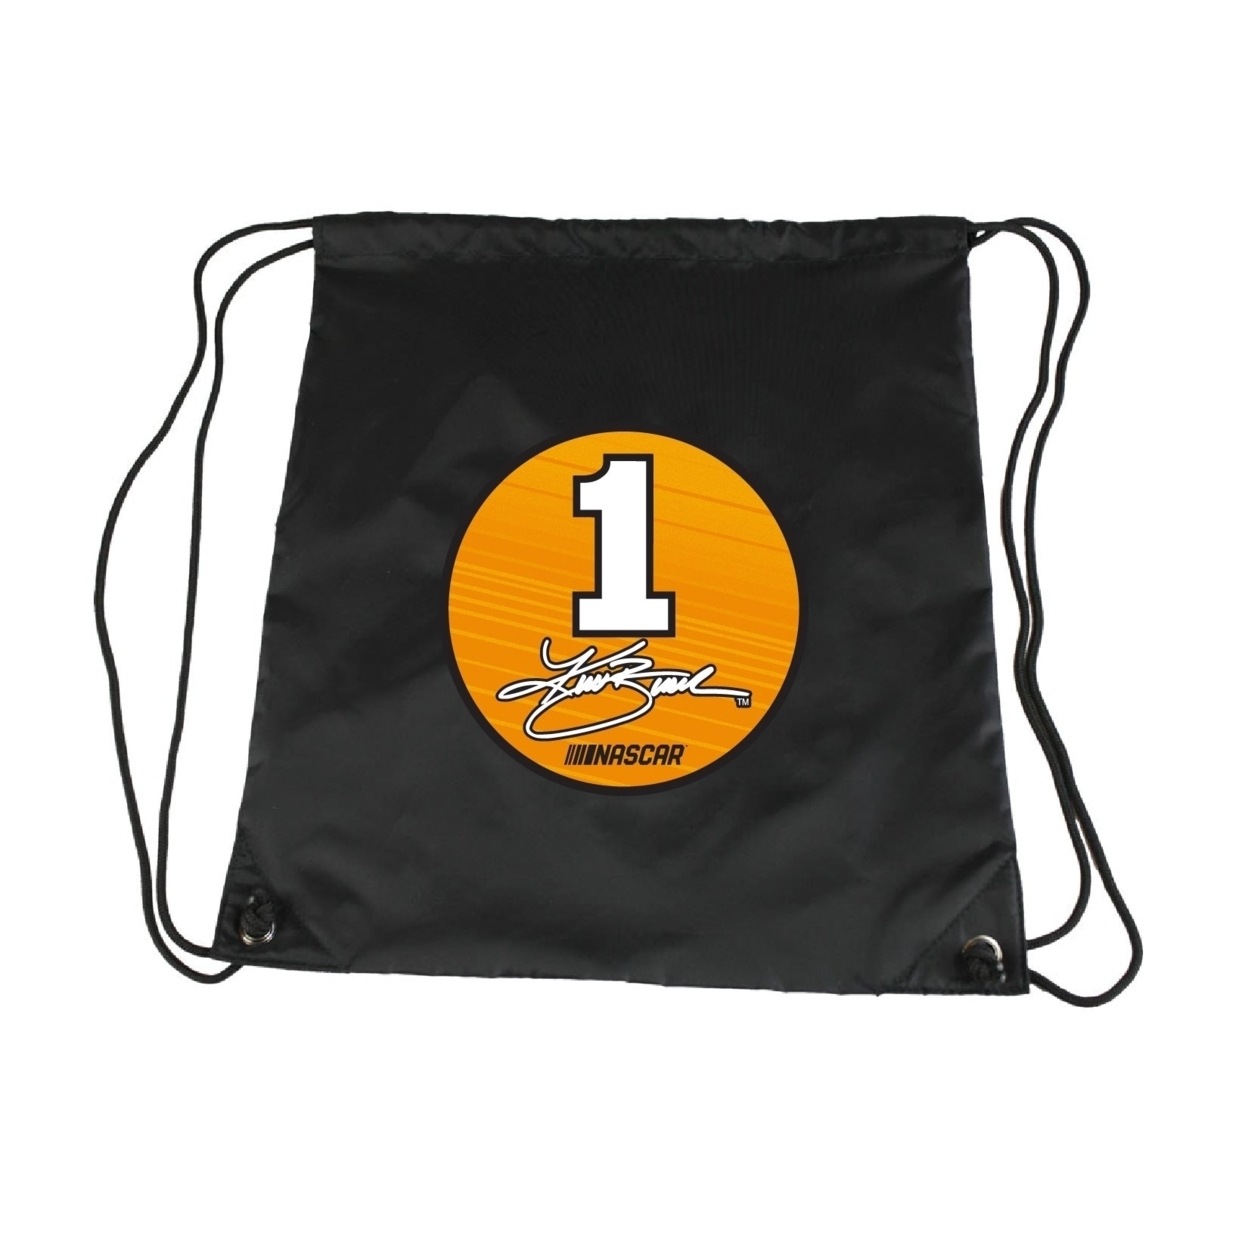 Kurt Busch # 1 Nascar Cinch Bag With Drawstring New For 2021